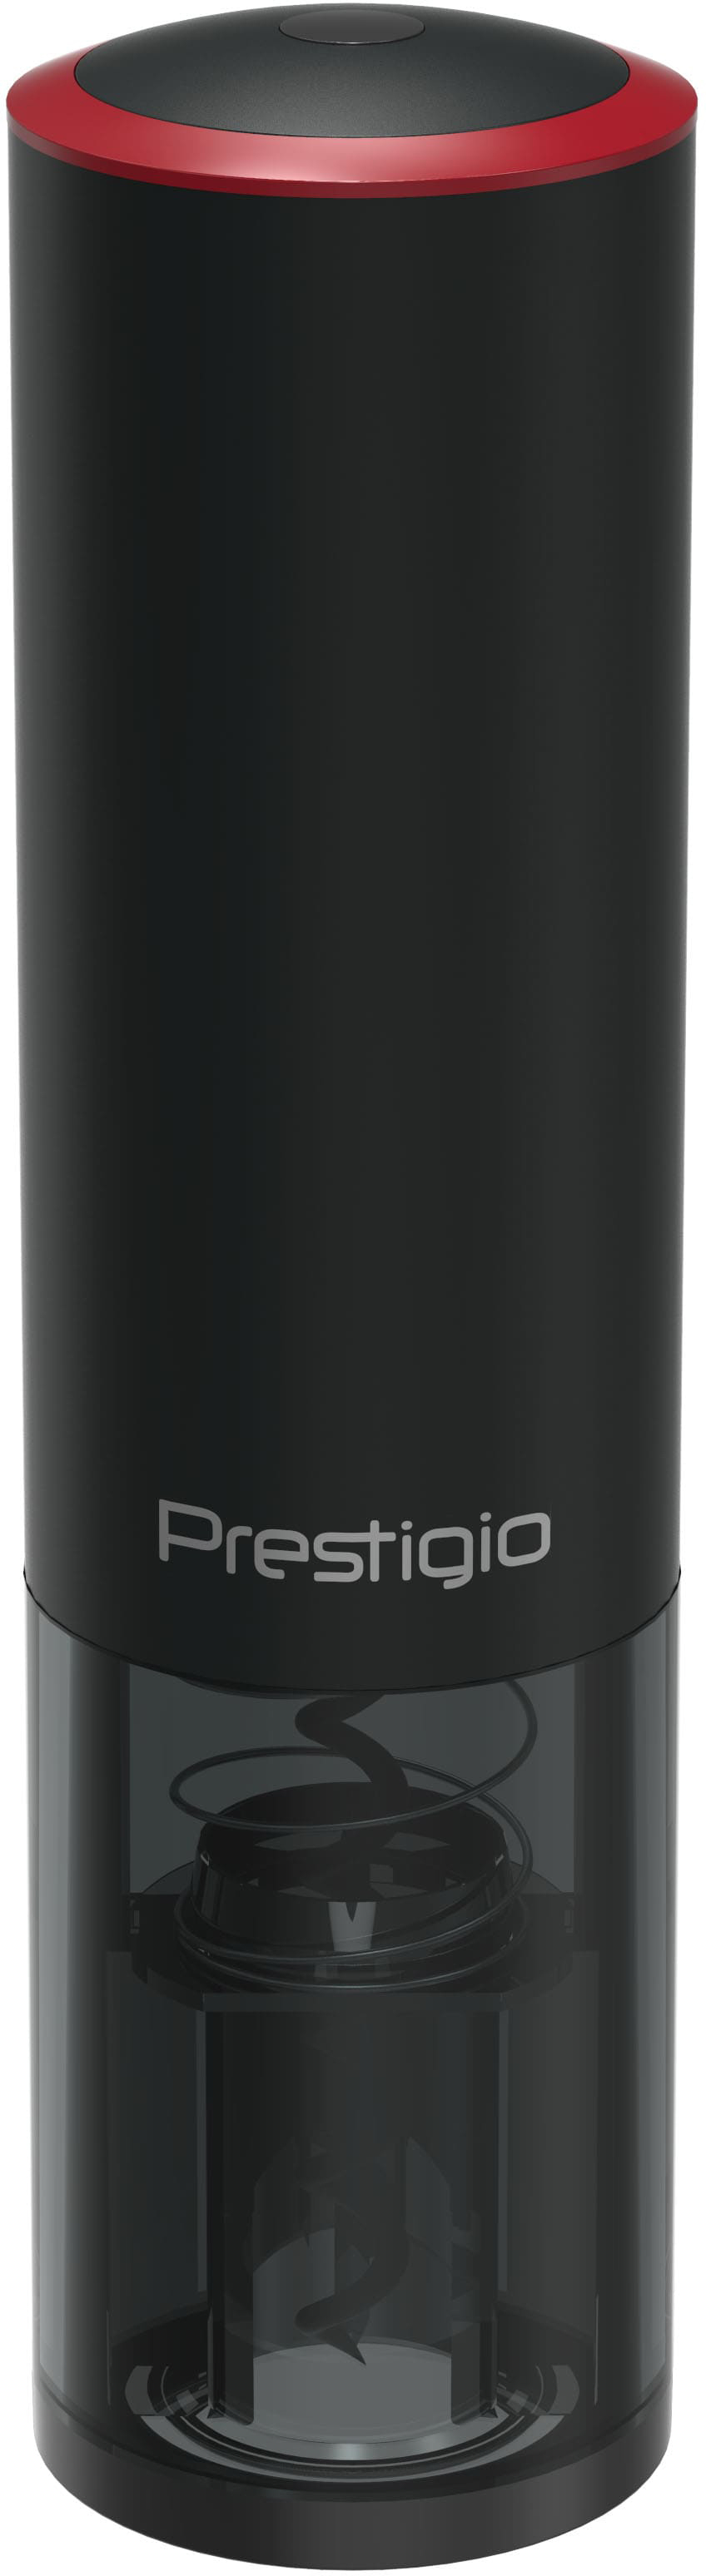 Акция на Умный штопор Prestigio Lugano Smart Wine Opener Black (PWO102BK) от Rozetka UA